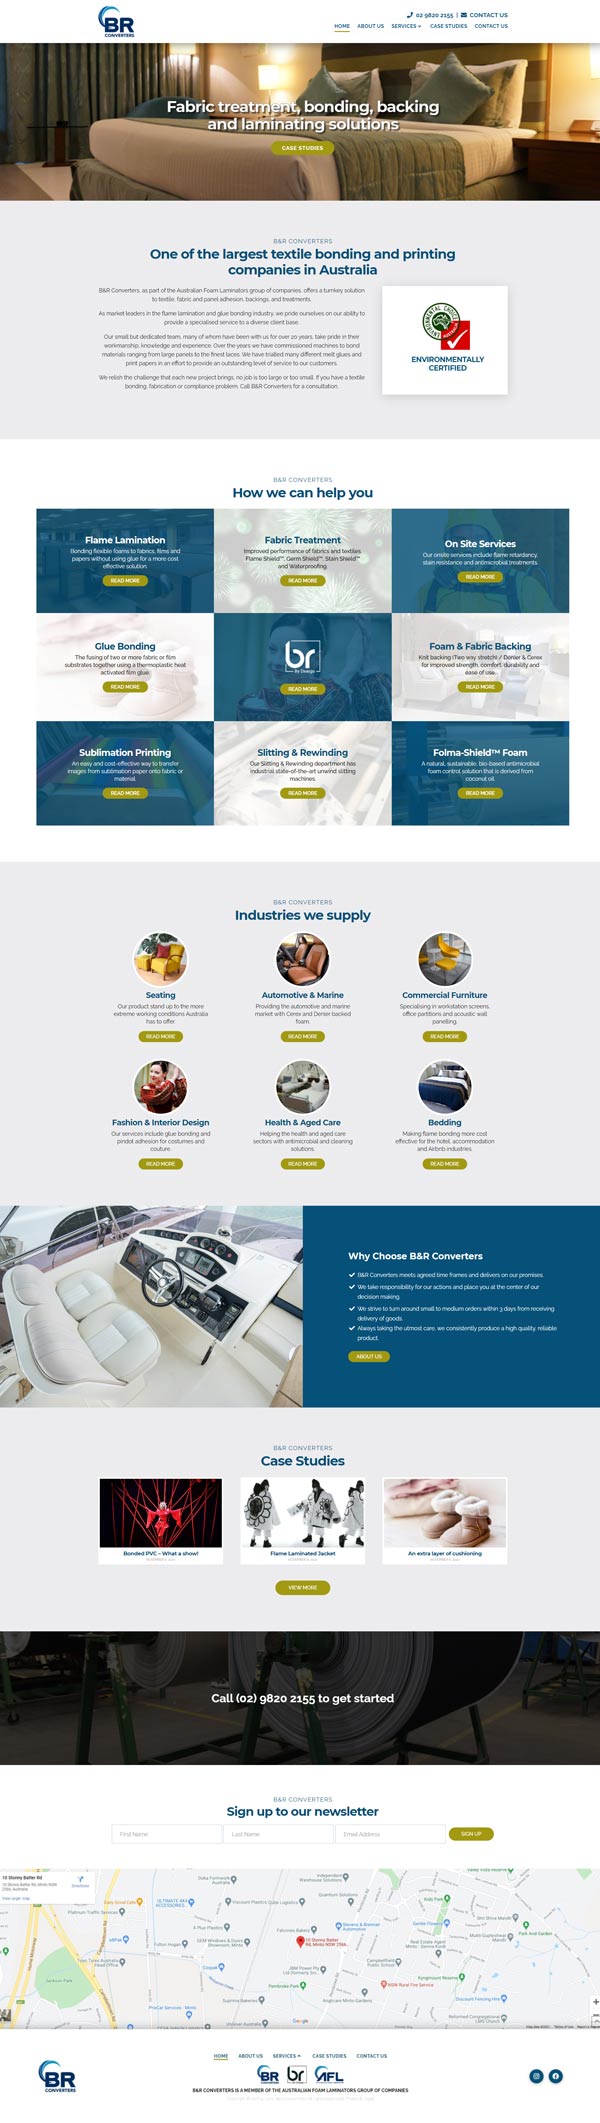 B&R Converters website designed by Big Red Bus Websites - ezample 1